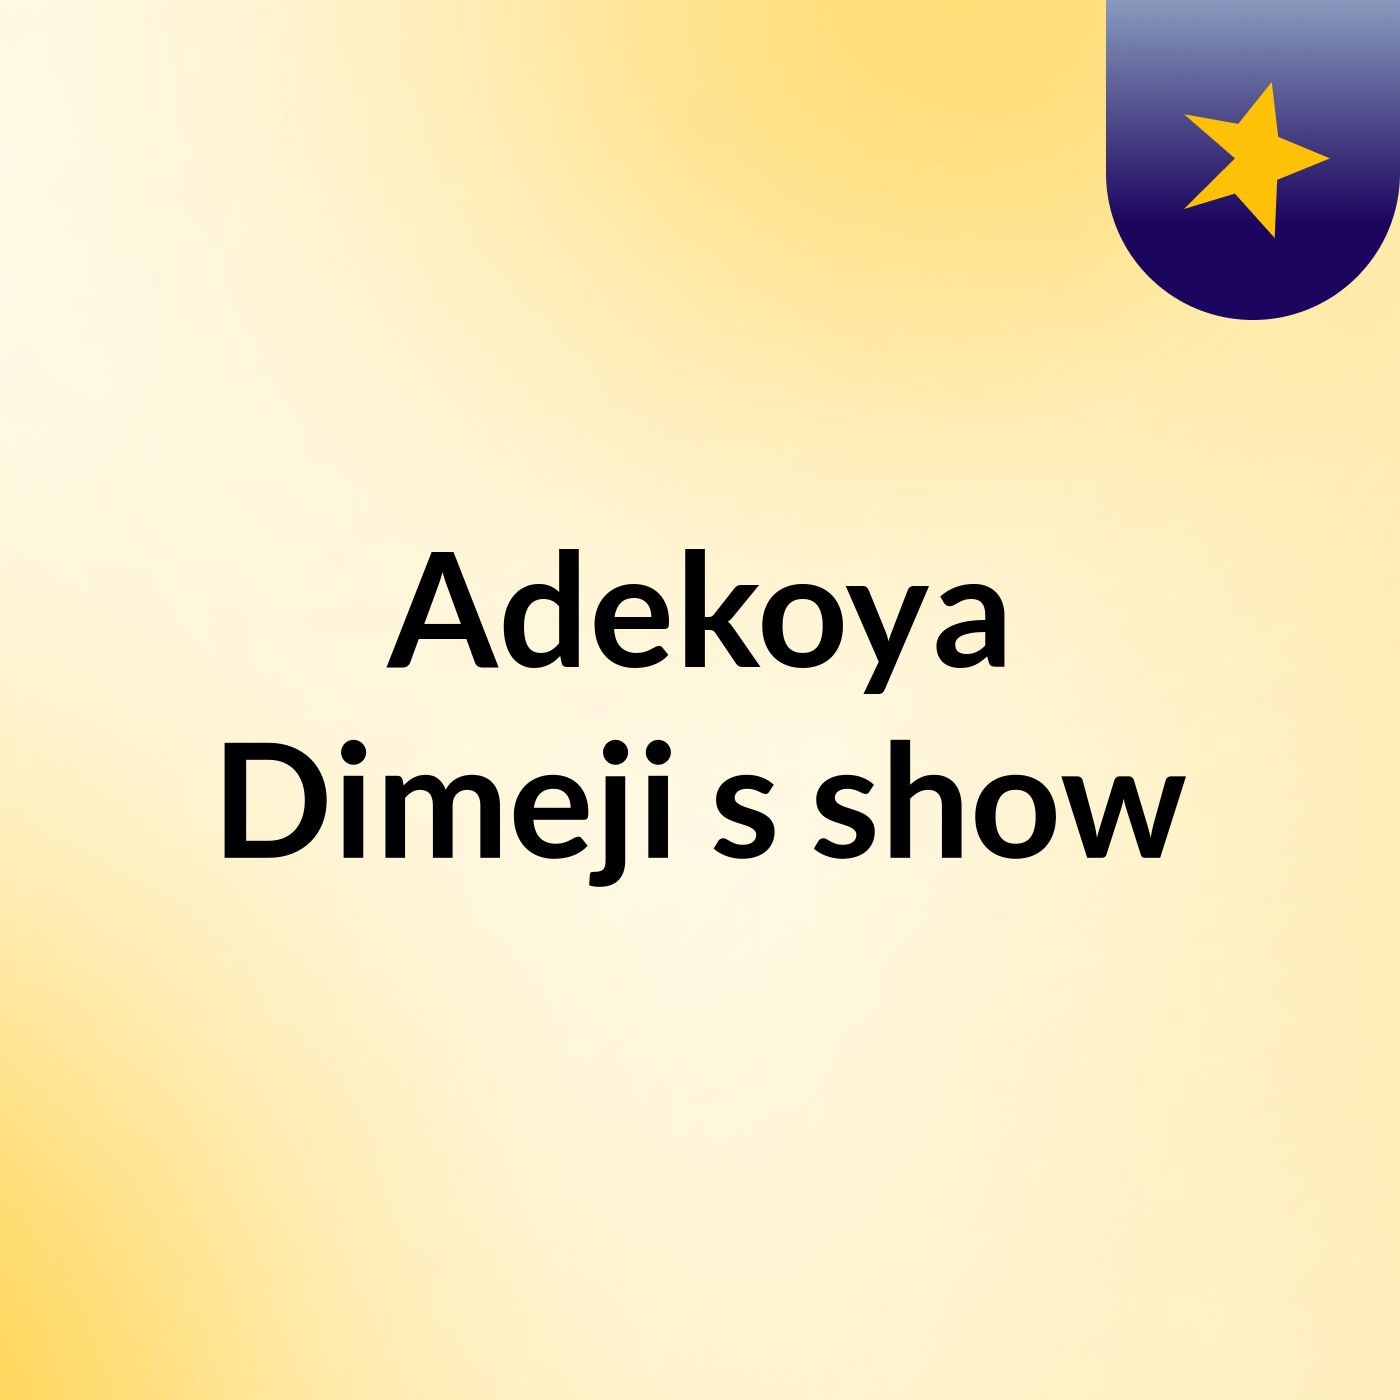 Adekoya Dimeji's show